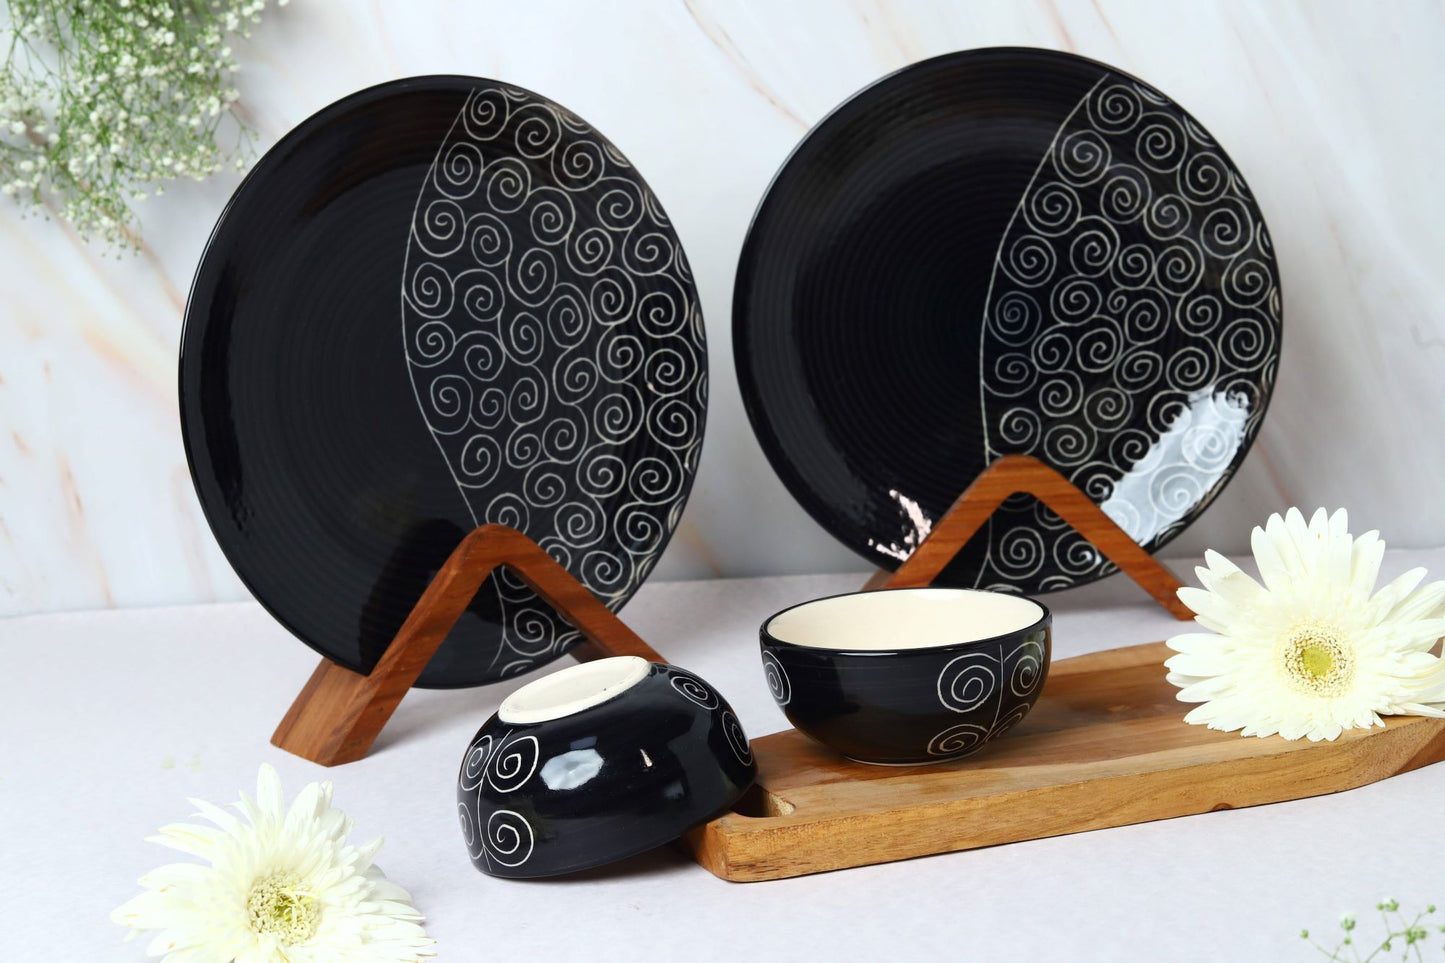 'Creeping Vine' Black Ceramic Dinner Plate and Veg Bowls, 4 Piece